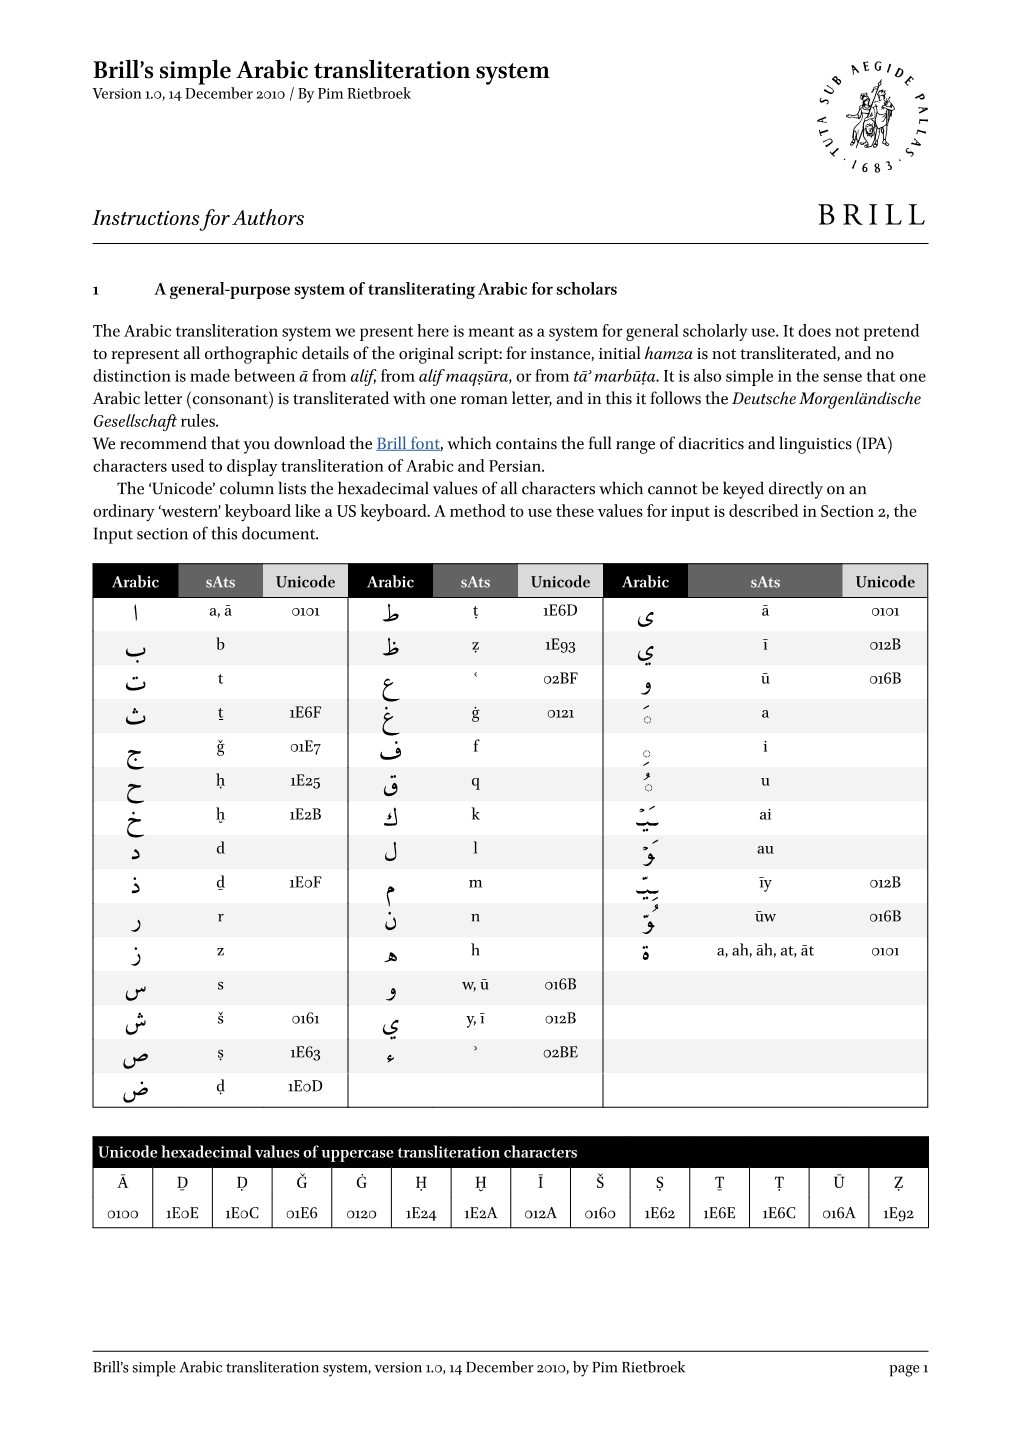 Brill's Simple Arabic Transliteration System